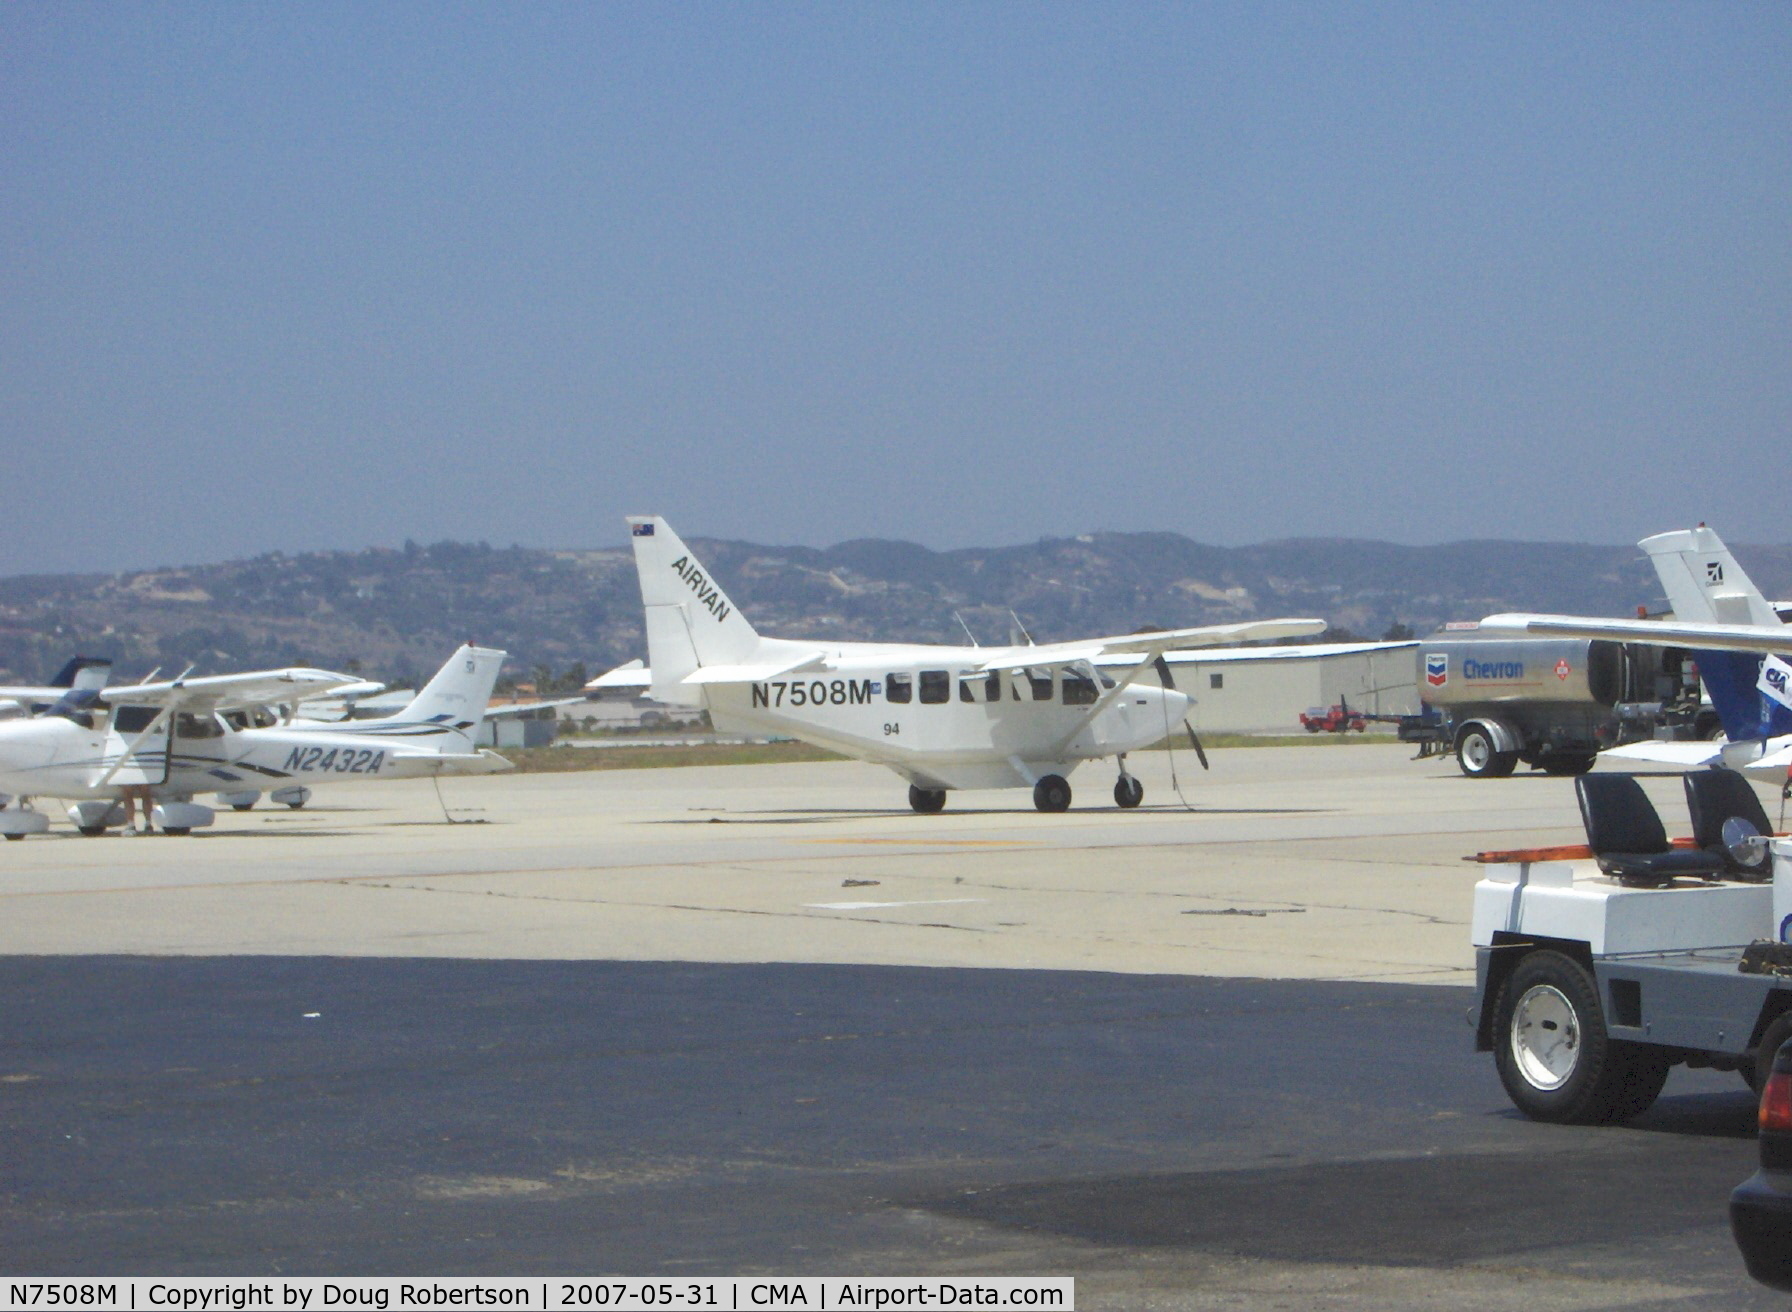 N7508M, Gippsland GA-8 Airvan C/N GA8-05-094, 2006 Gippsland Aeronautics GA-8 AIRVAN, Lycoming IO-540-K1A5 300 Hp, CS prop, 8 seats, 1 of an owned fleet of 3